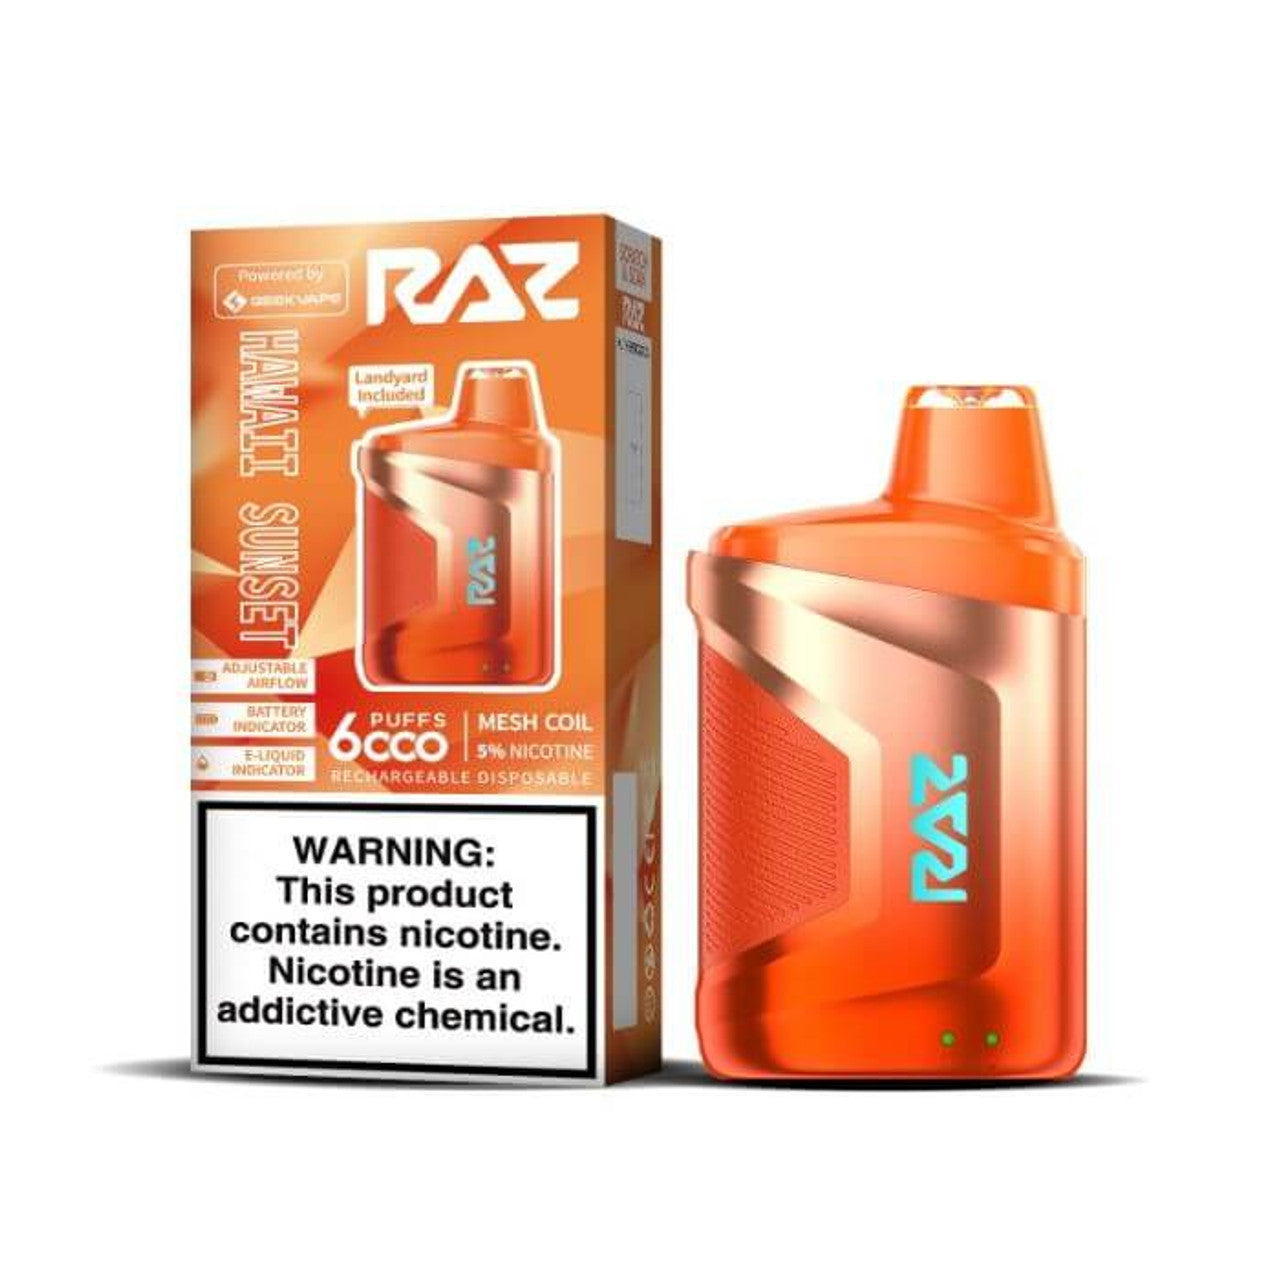 RAZ CA6000 Disposable Vape 6000 PUFF – 1 PACK